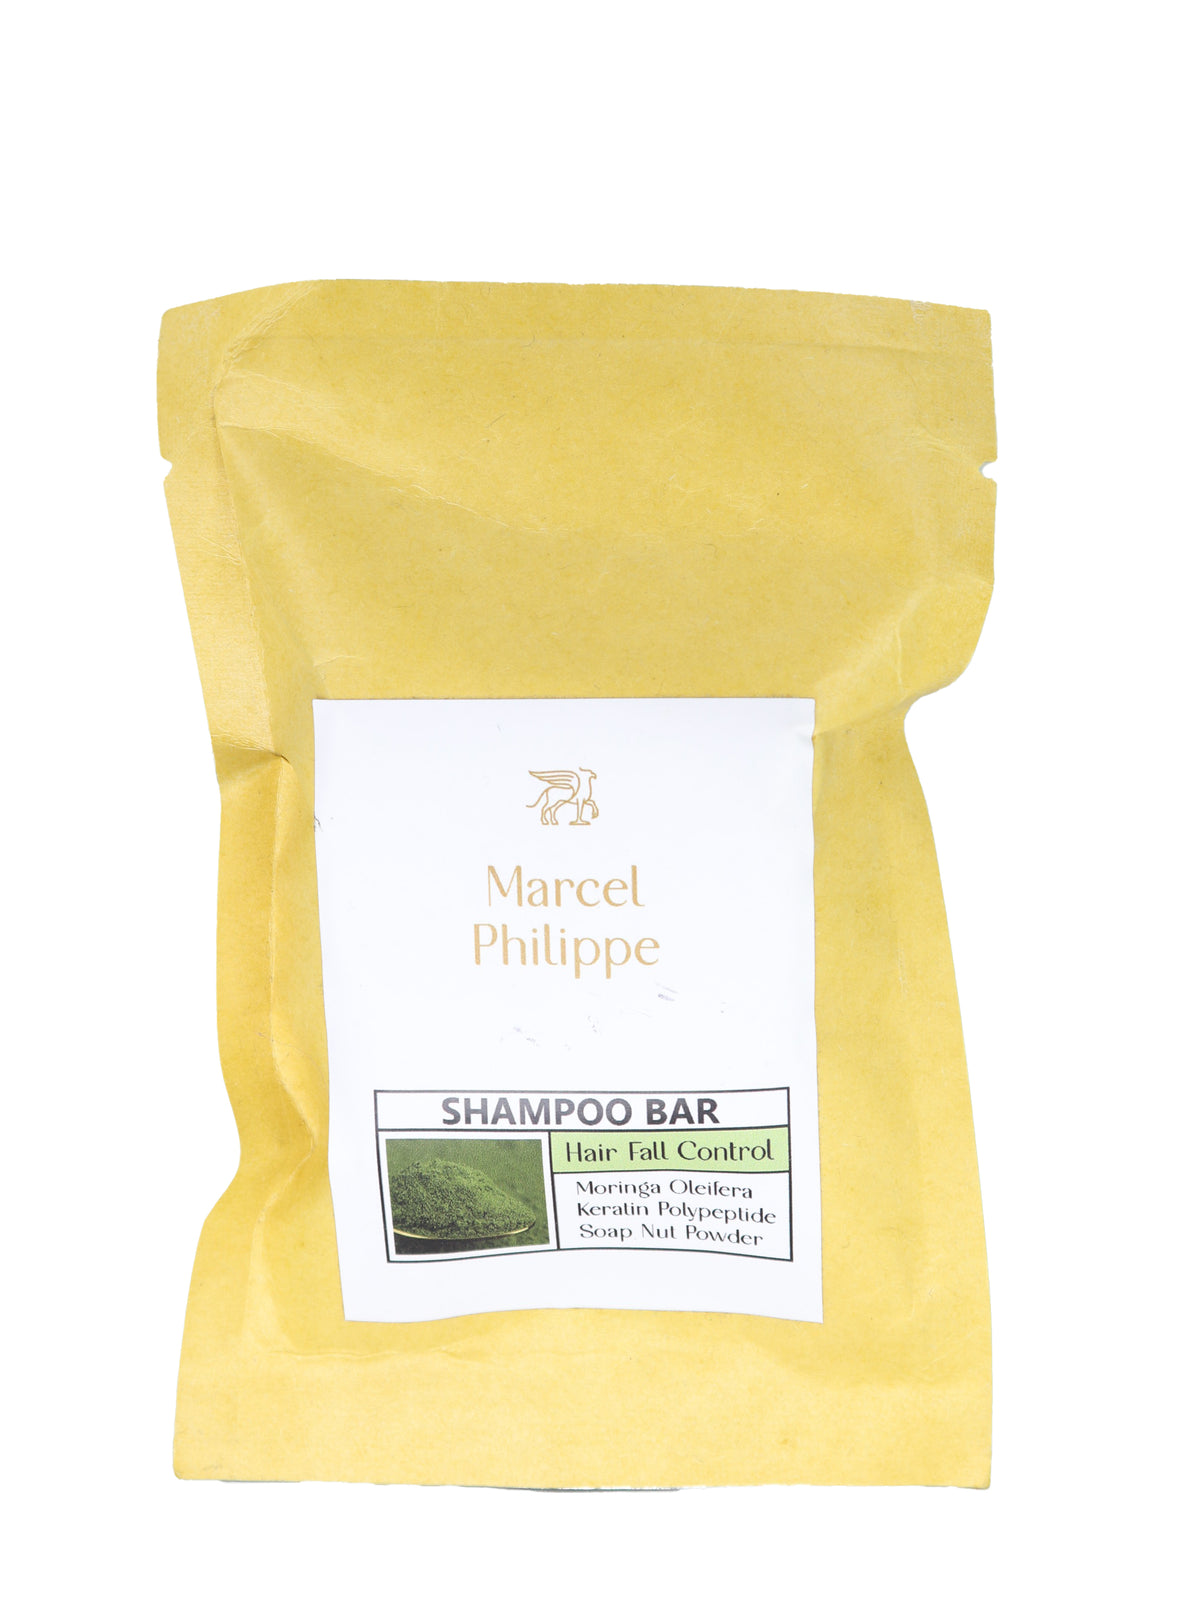 Marcel Philippe Shampoo Bar 65g